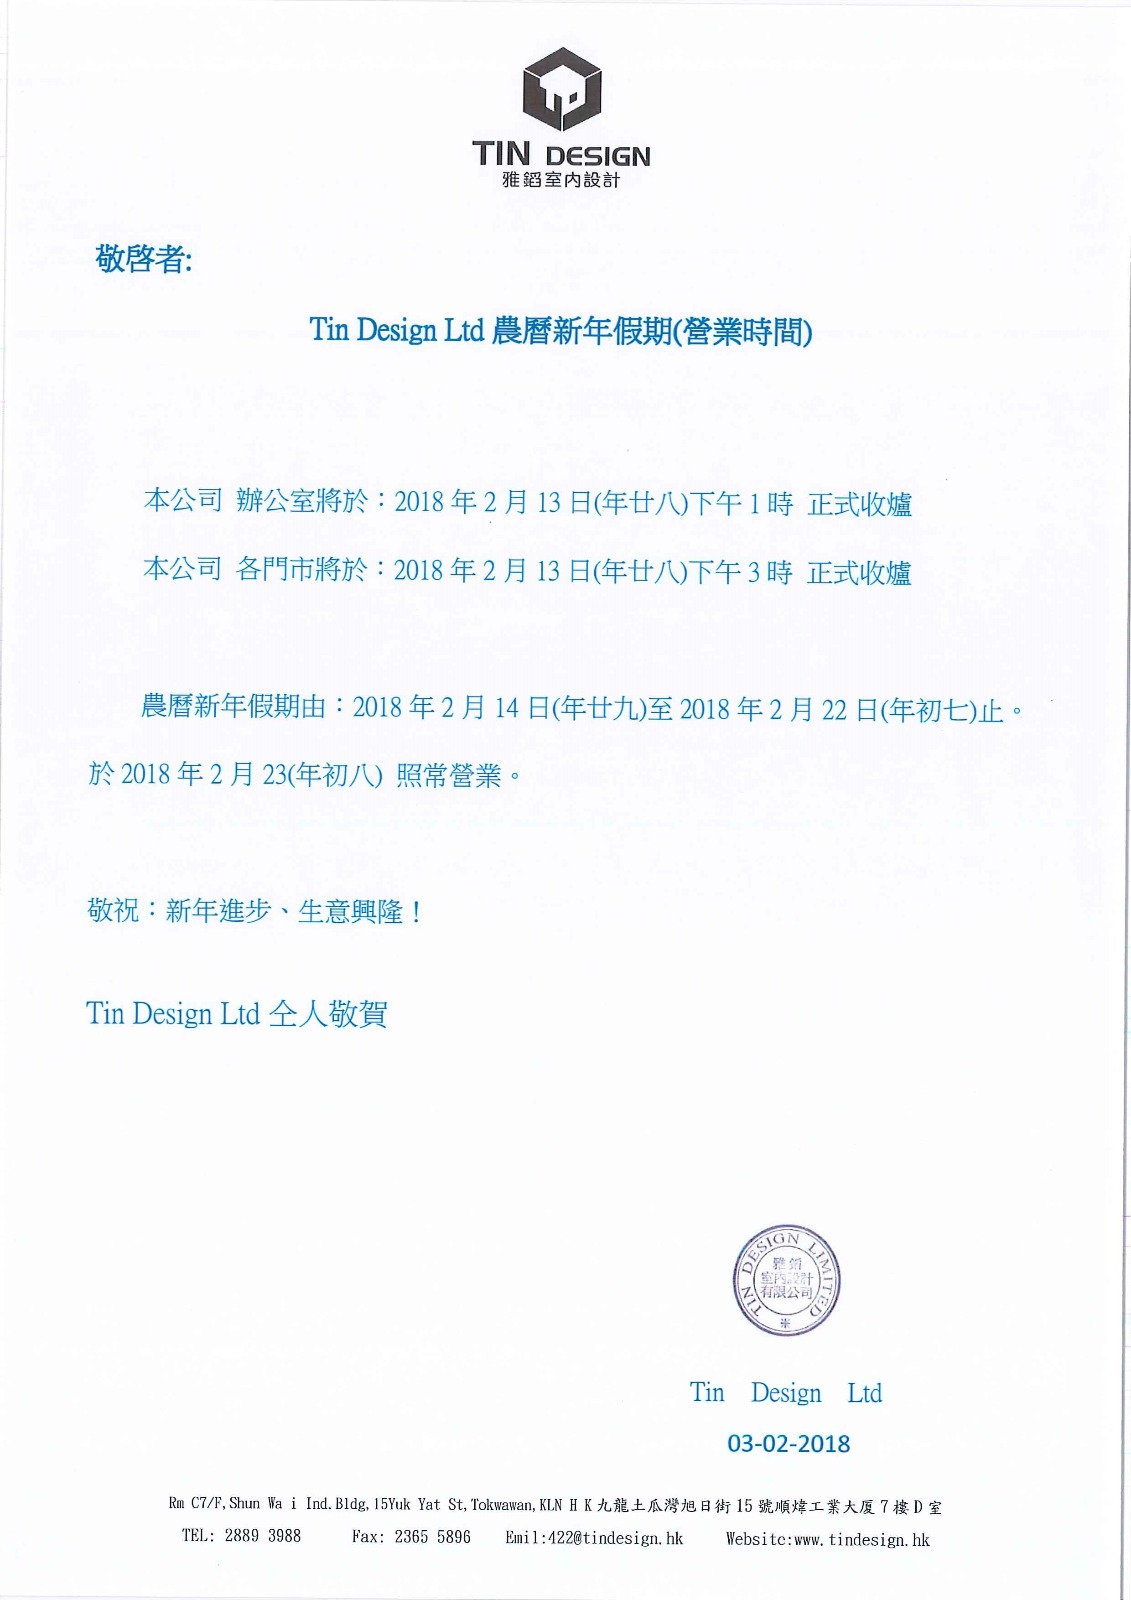 2018_Tin Design Ltd年春節假期通告